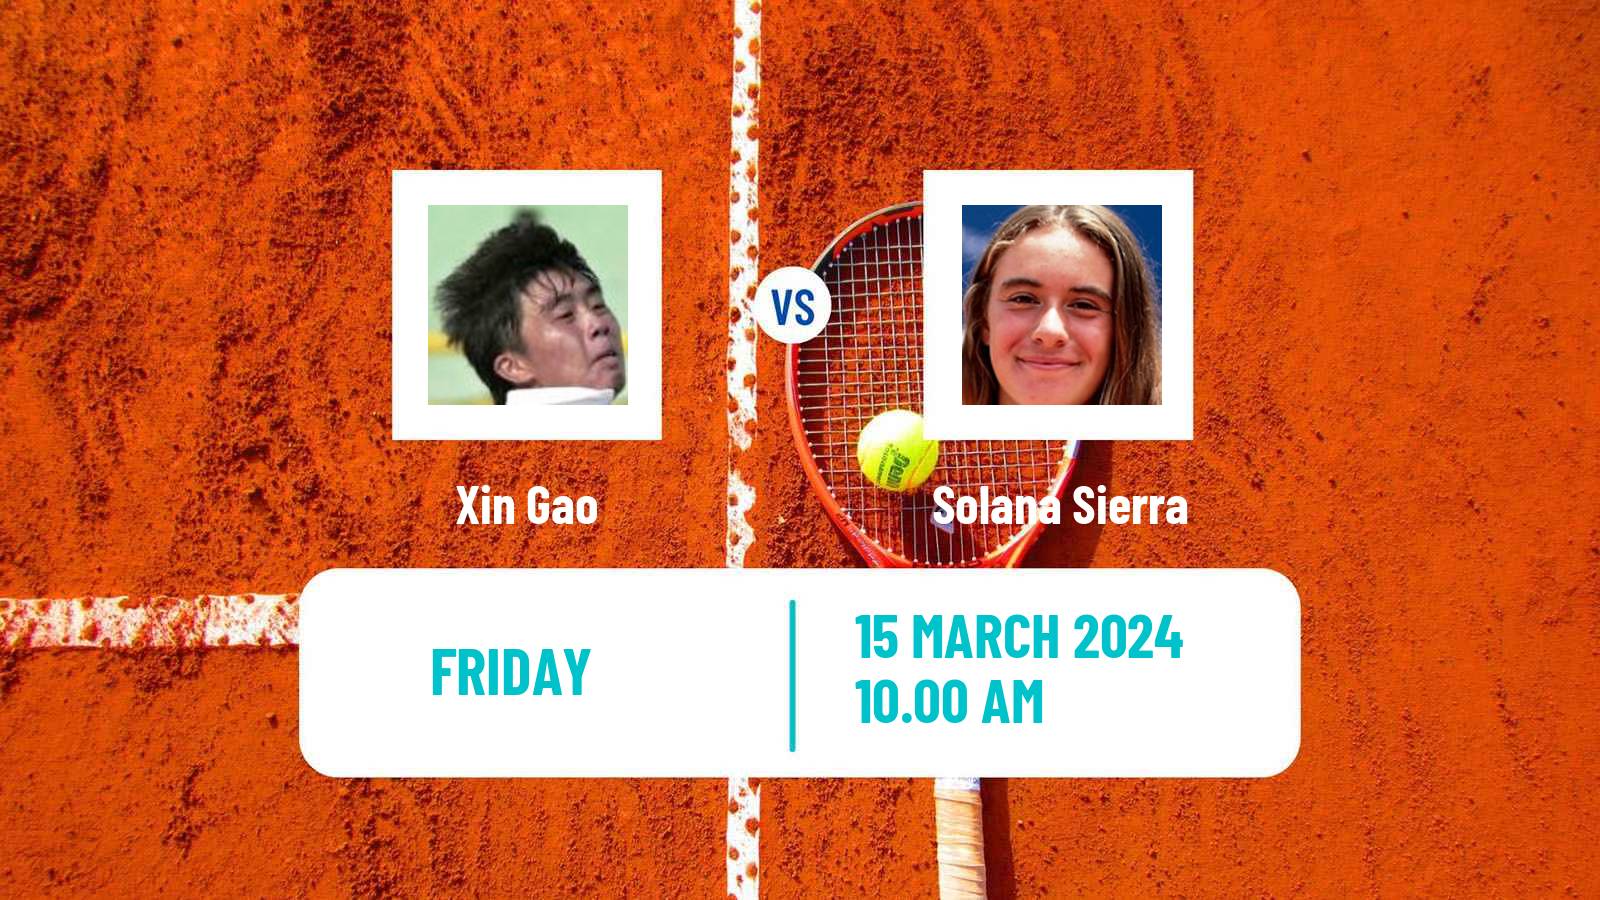 Tennis ITF W35 Santo Domingo 2 Women Xin Gao - Solana Sierra